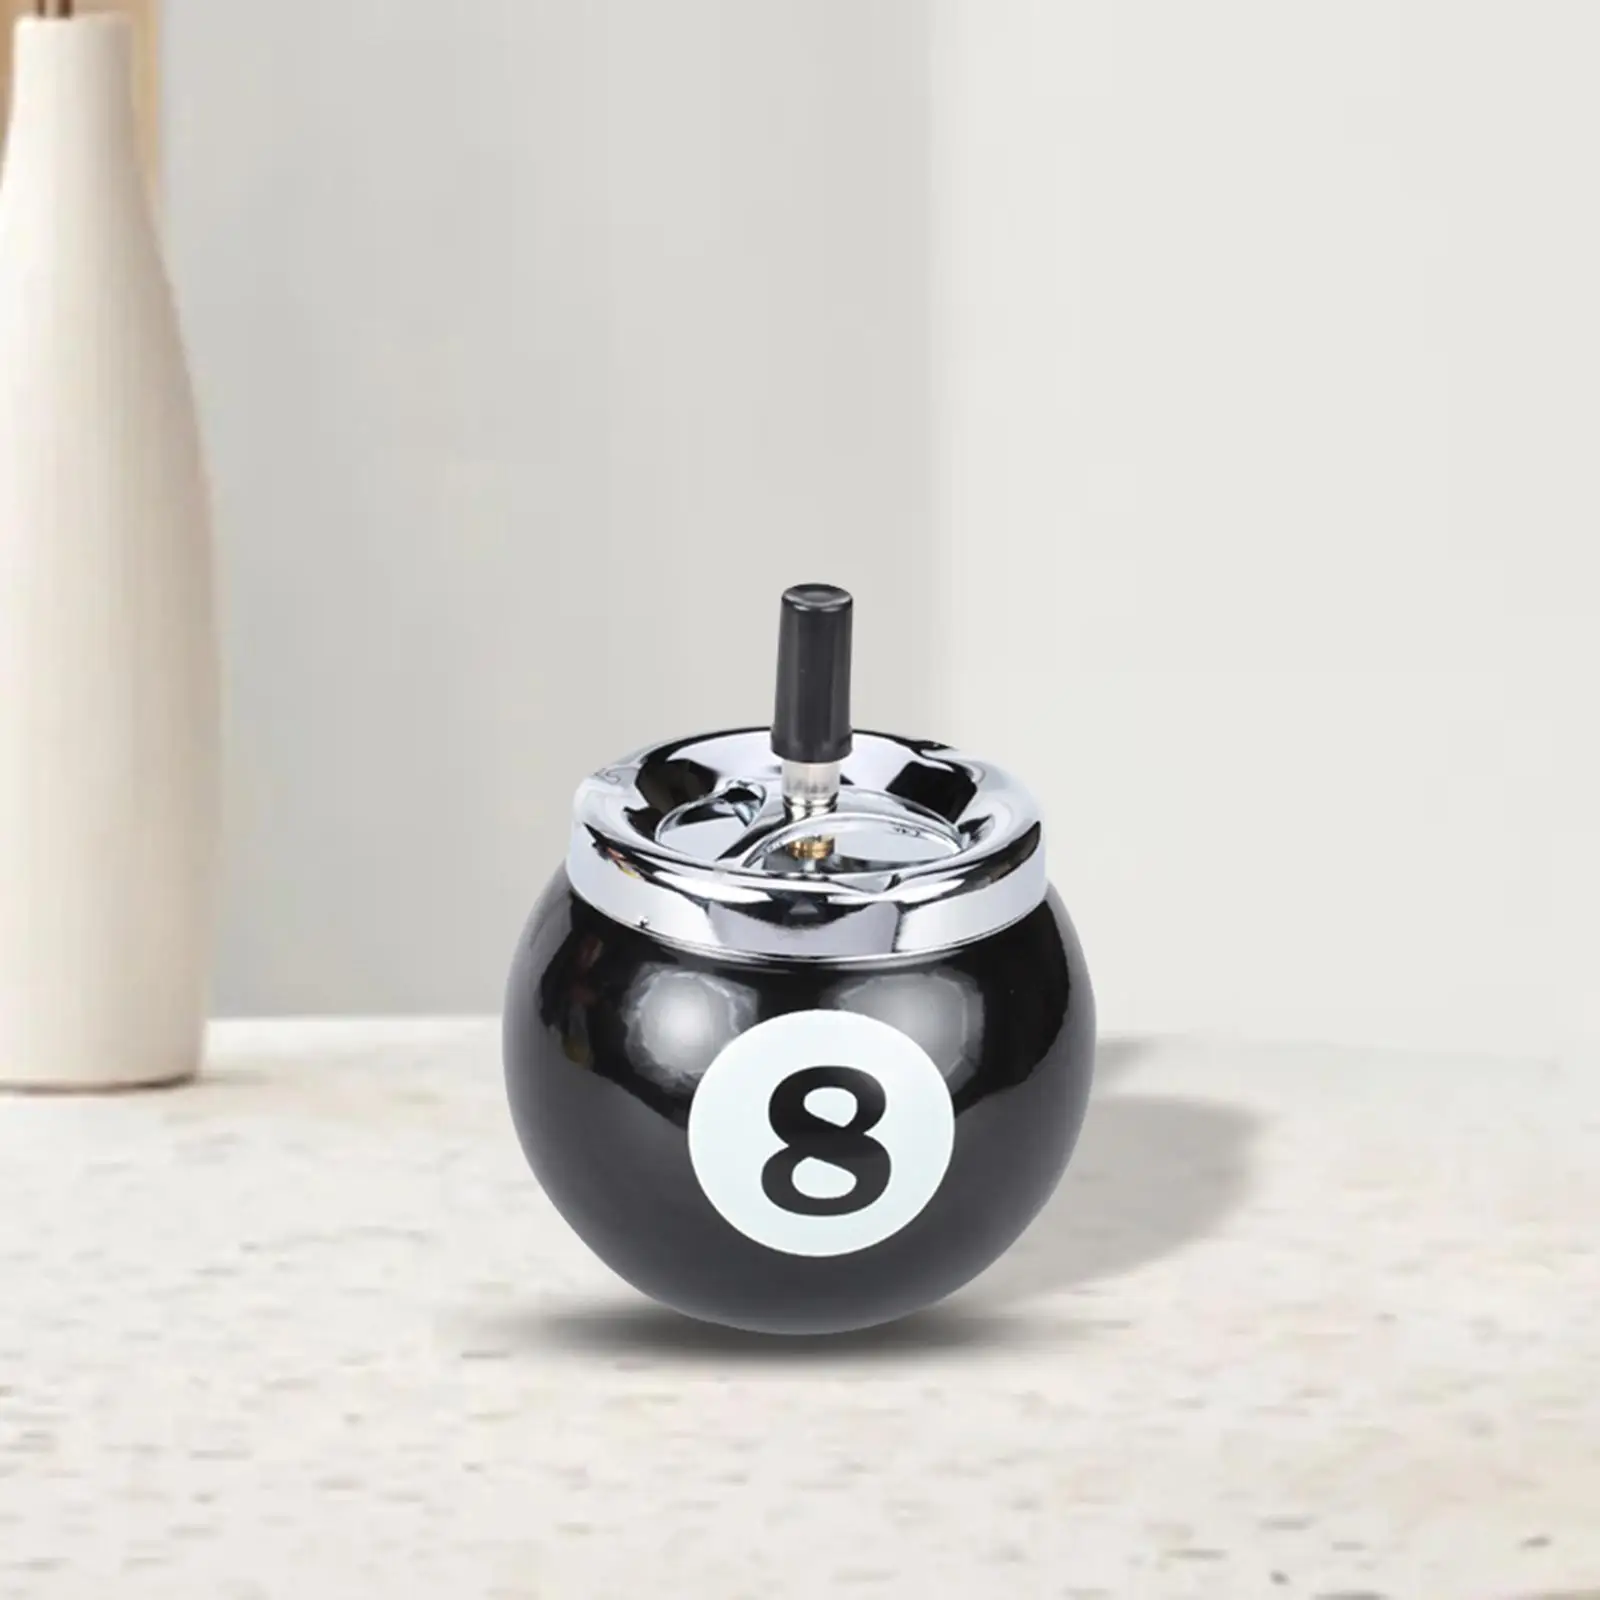 Push Button Shaped Billiard Ball.89.6 Cm